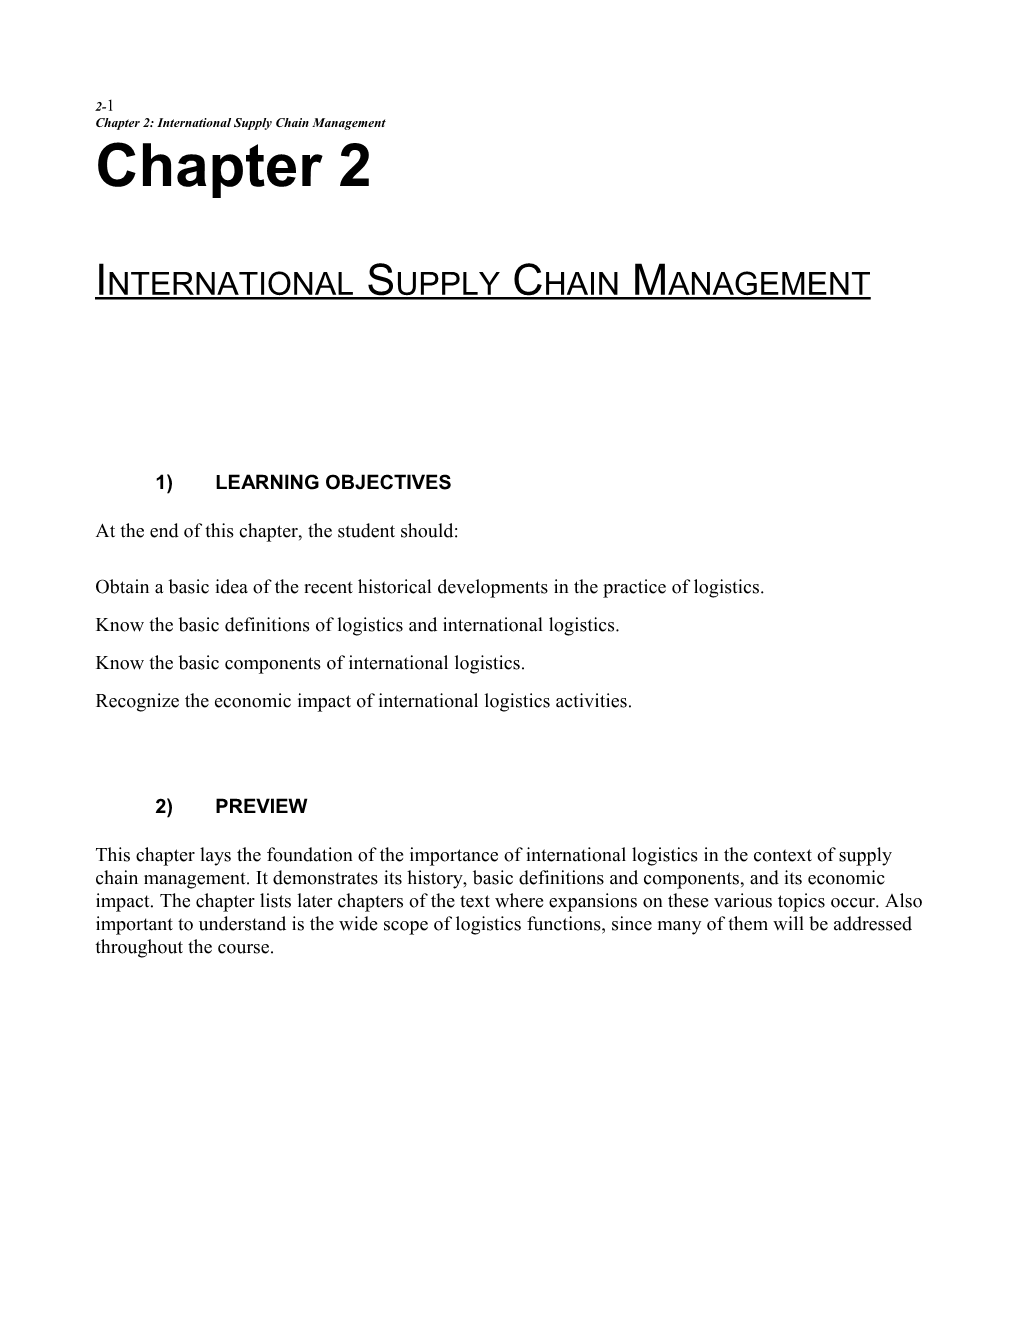 Chapter 2: International Supply Chain Management